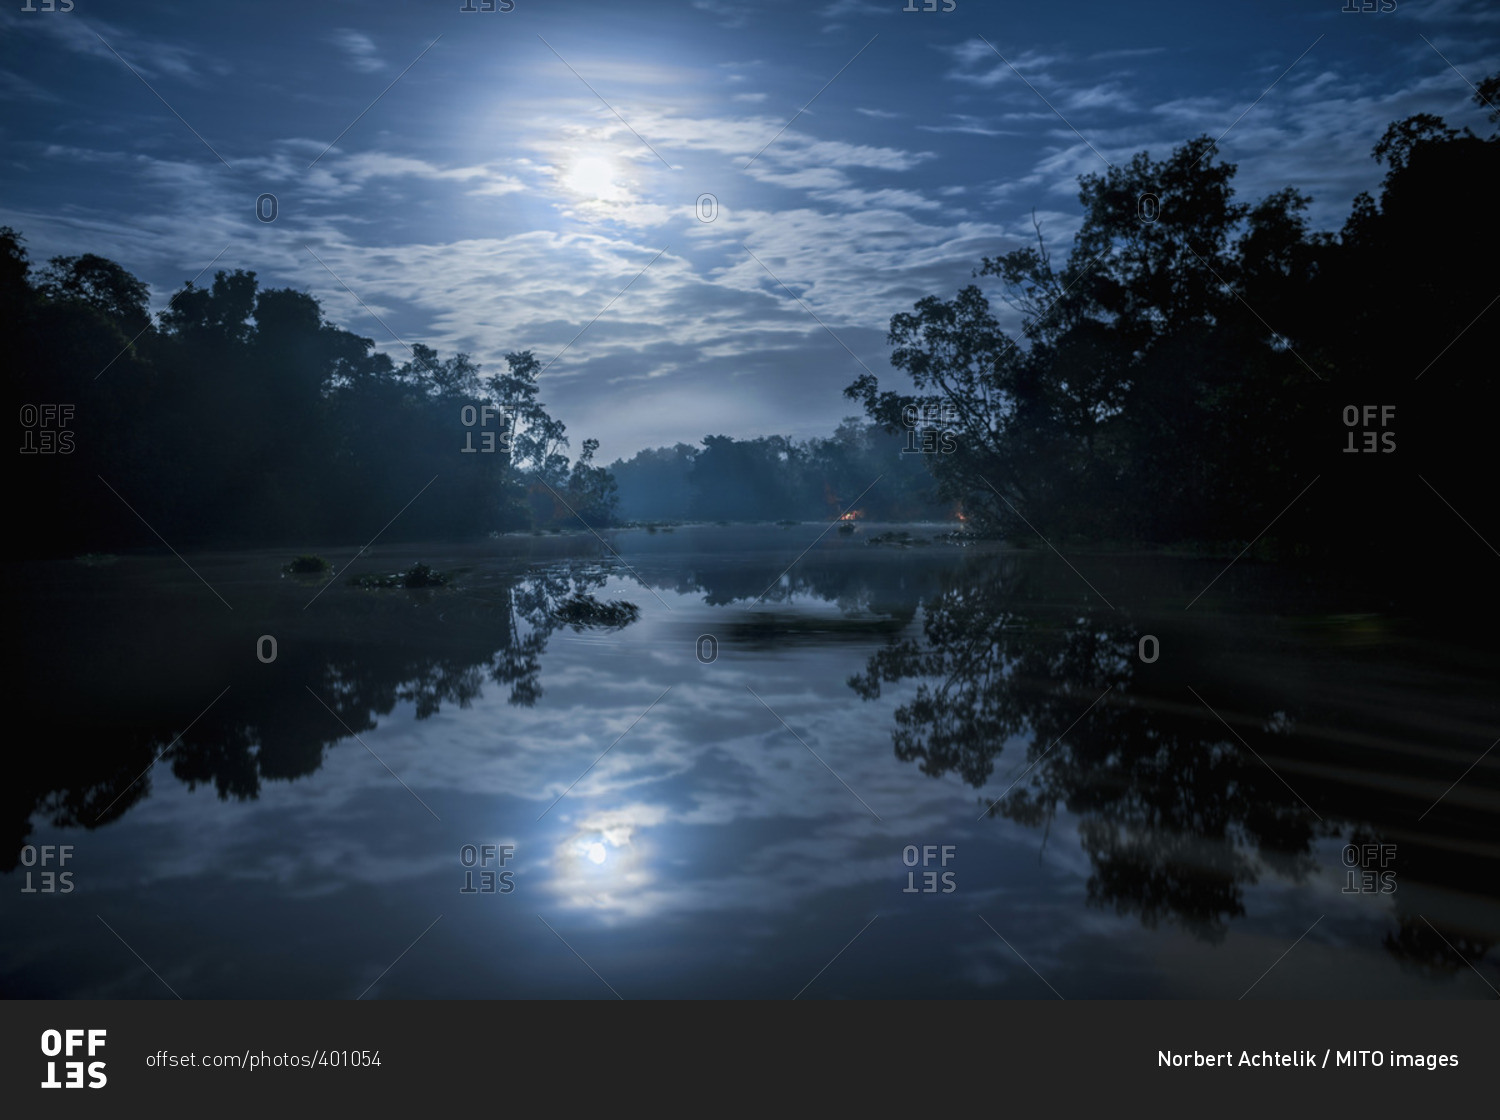 Reflection of moon in river, Orinoco River, Orinoco Delta, Venezuela